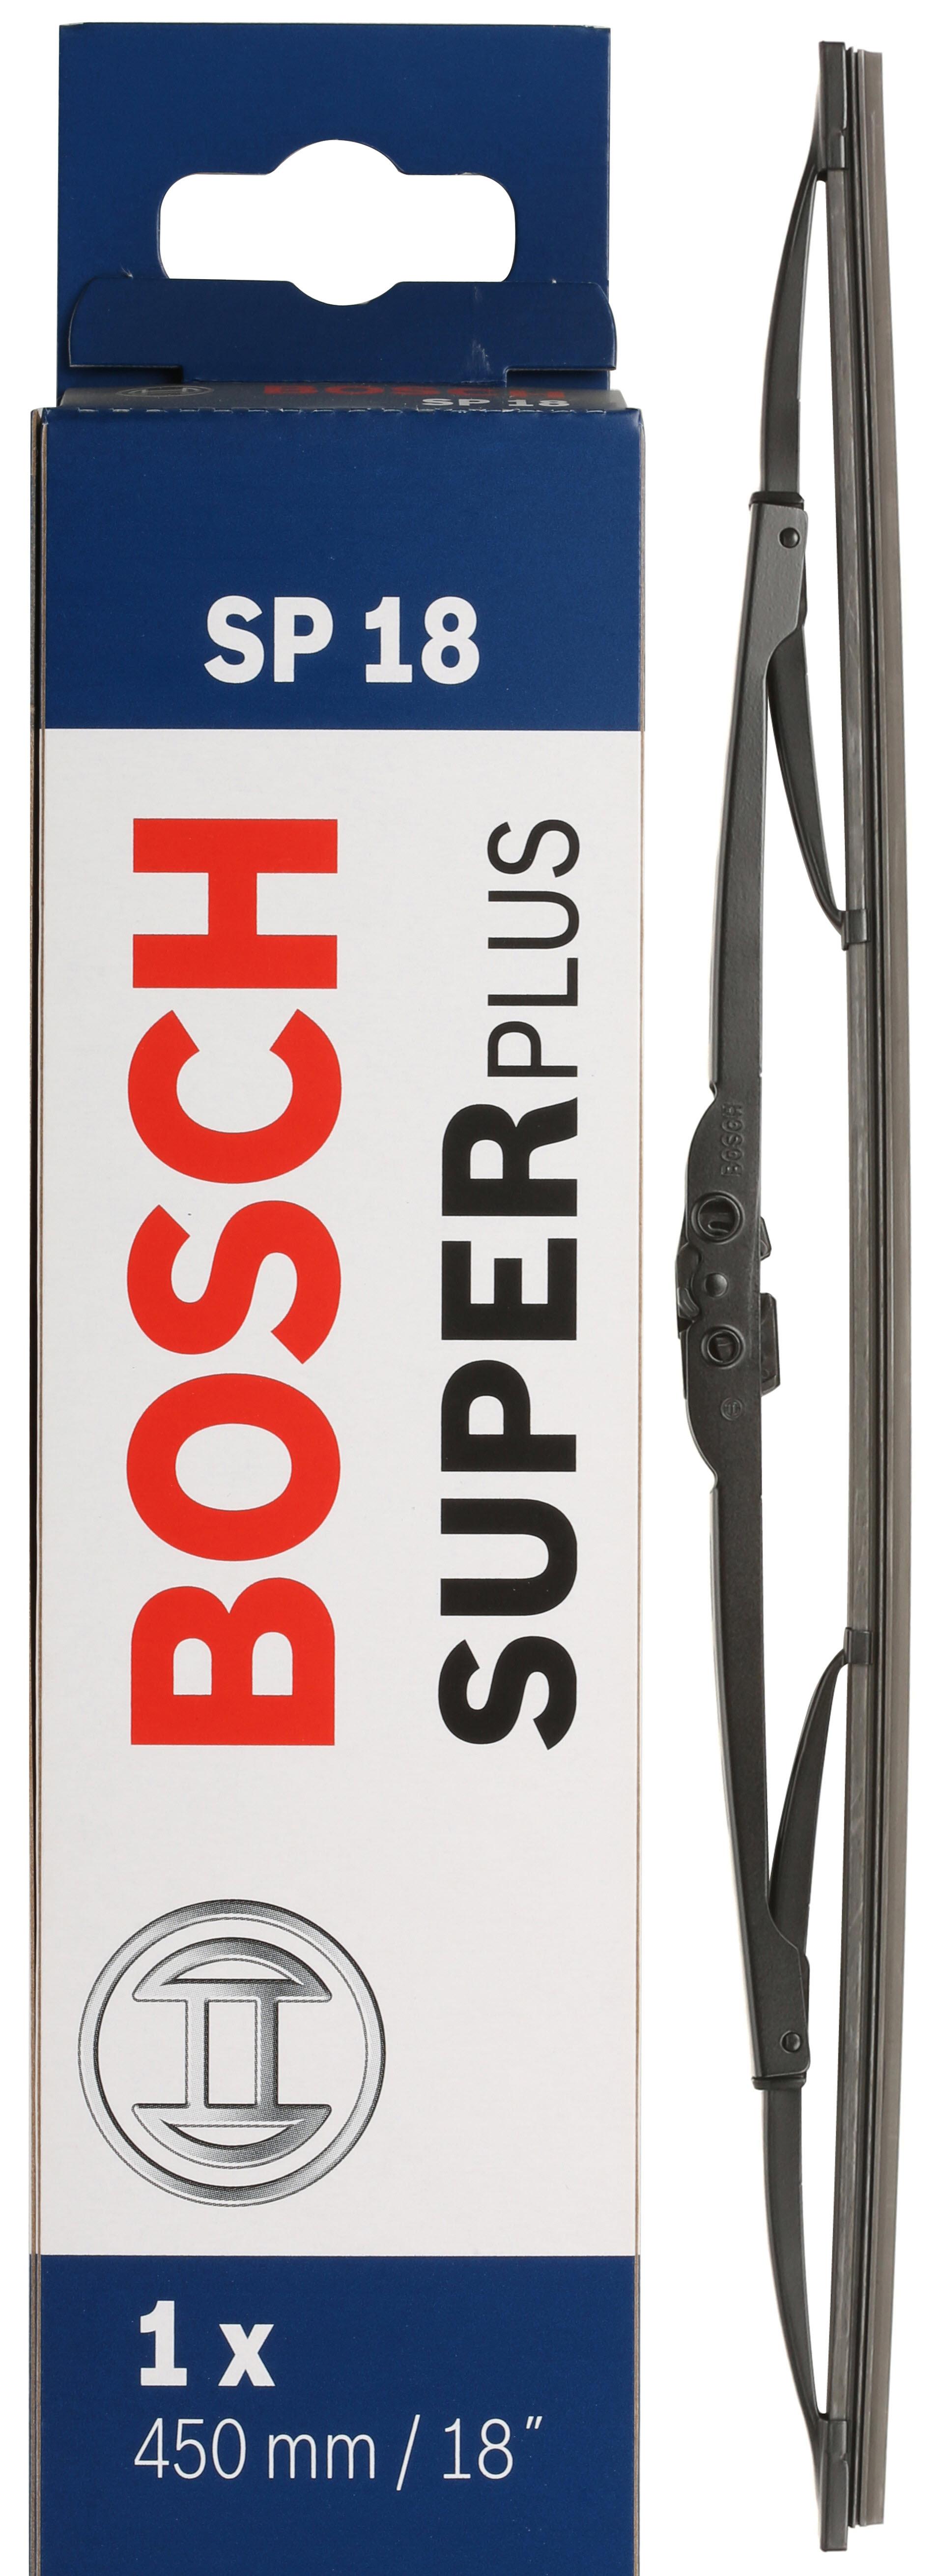 Bosch Sp18 Wiper Blade - Single